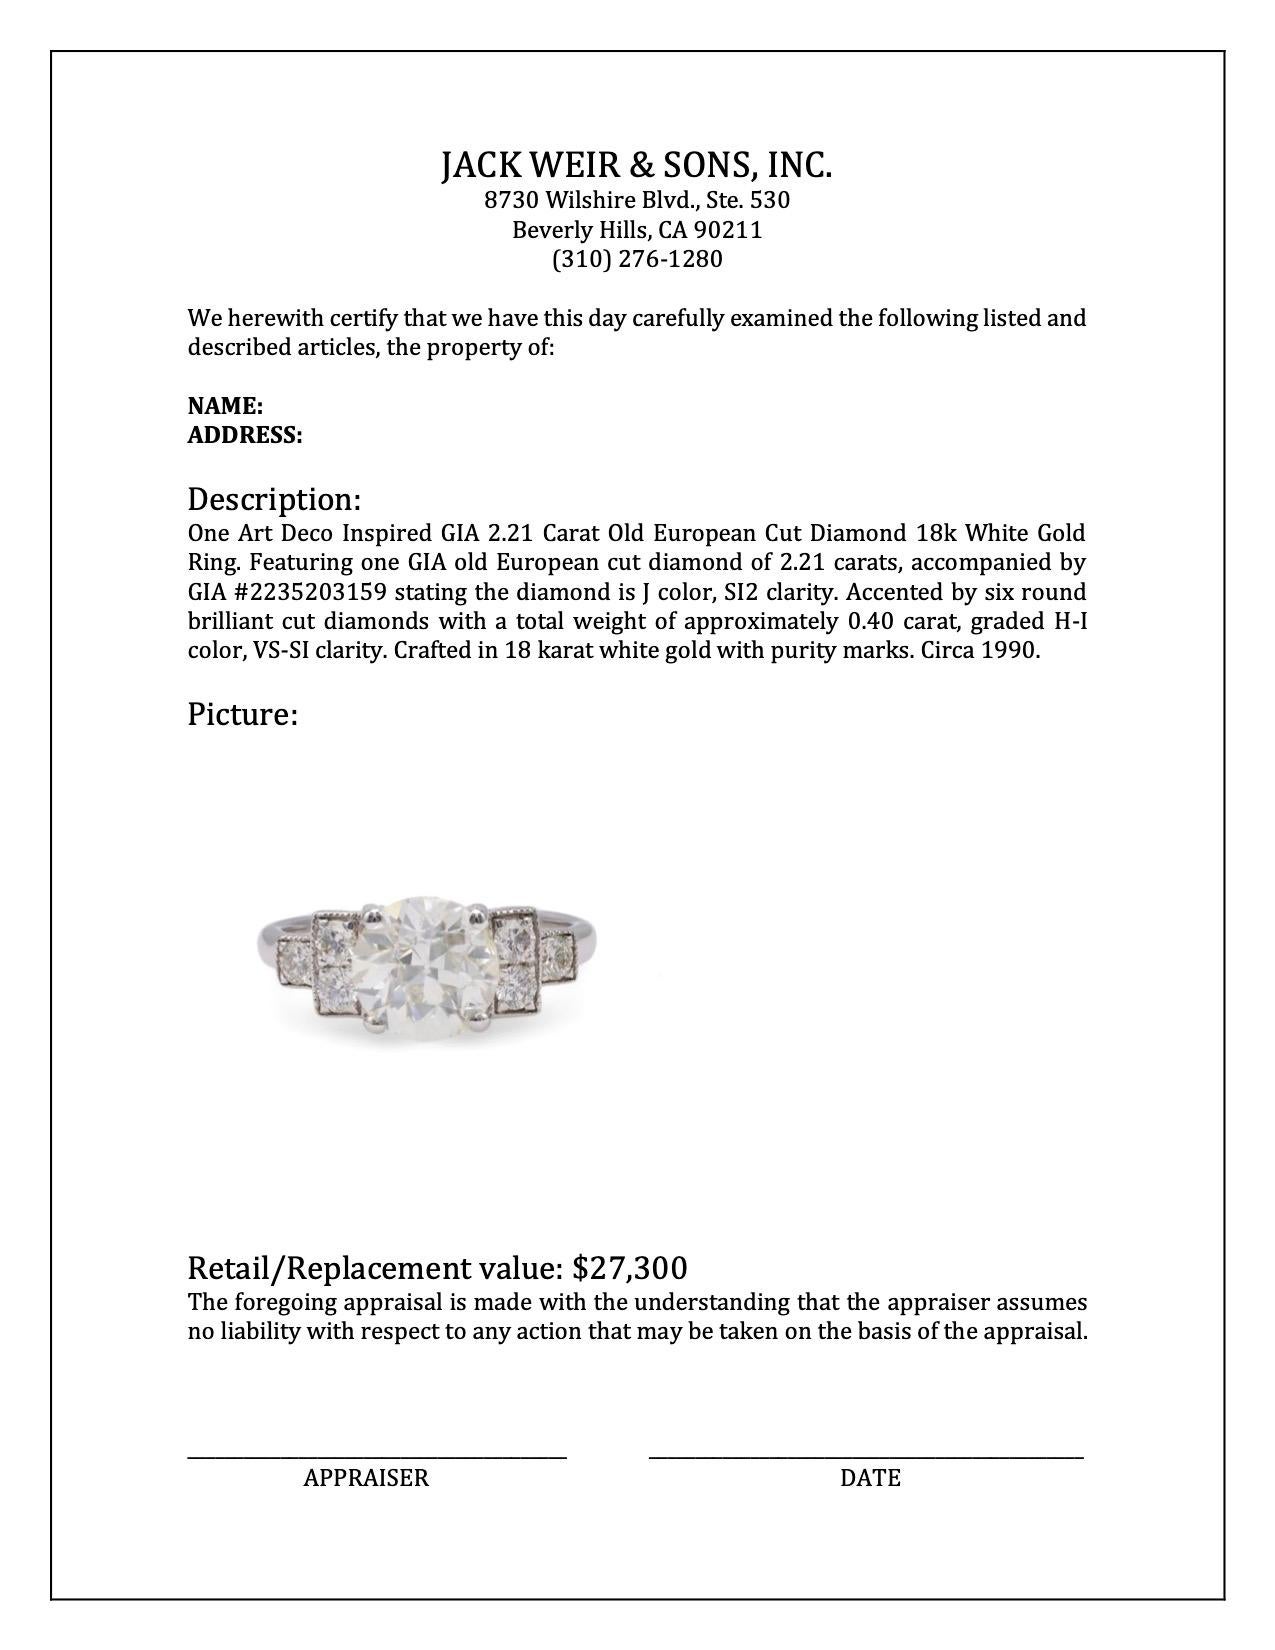 Art Deco Inspired GIA 2.21 Carat Old European Cut Diamond 18k White Gold Ring For Sale 3